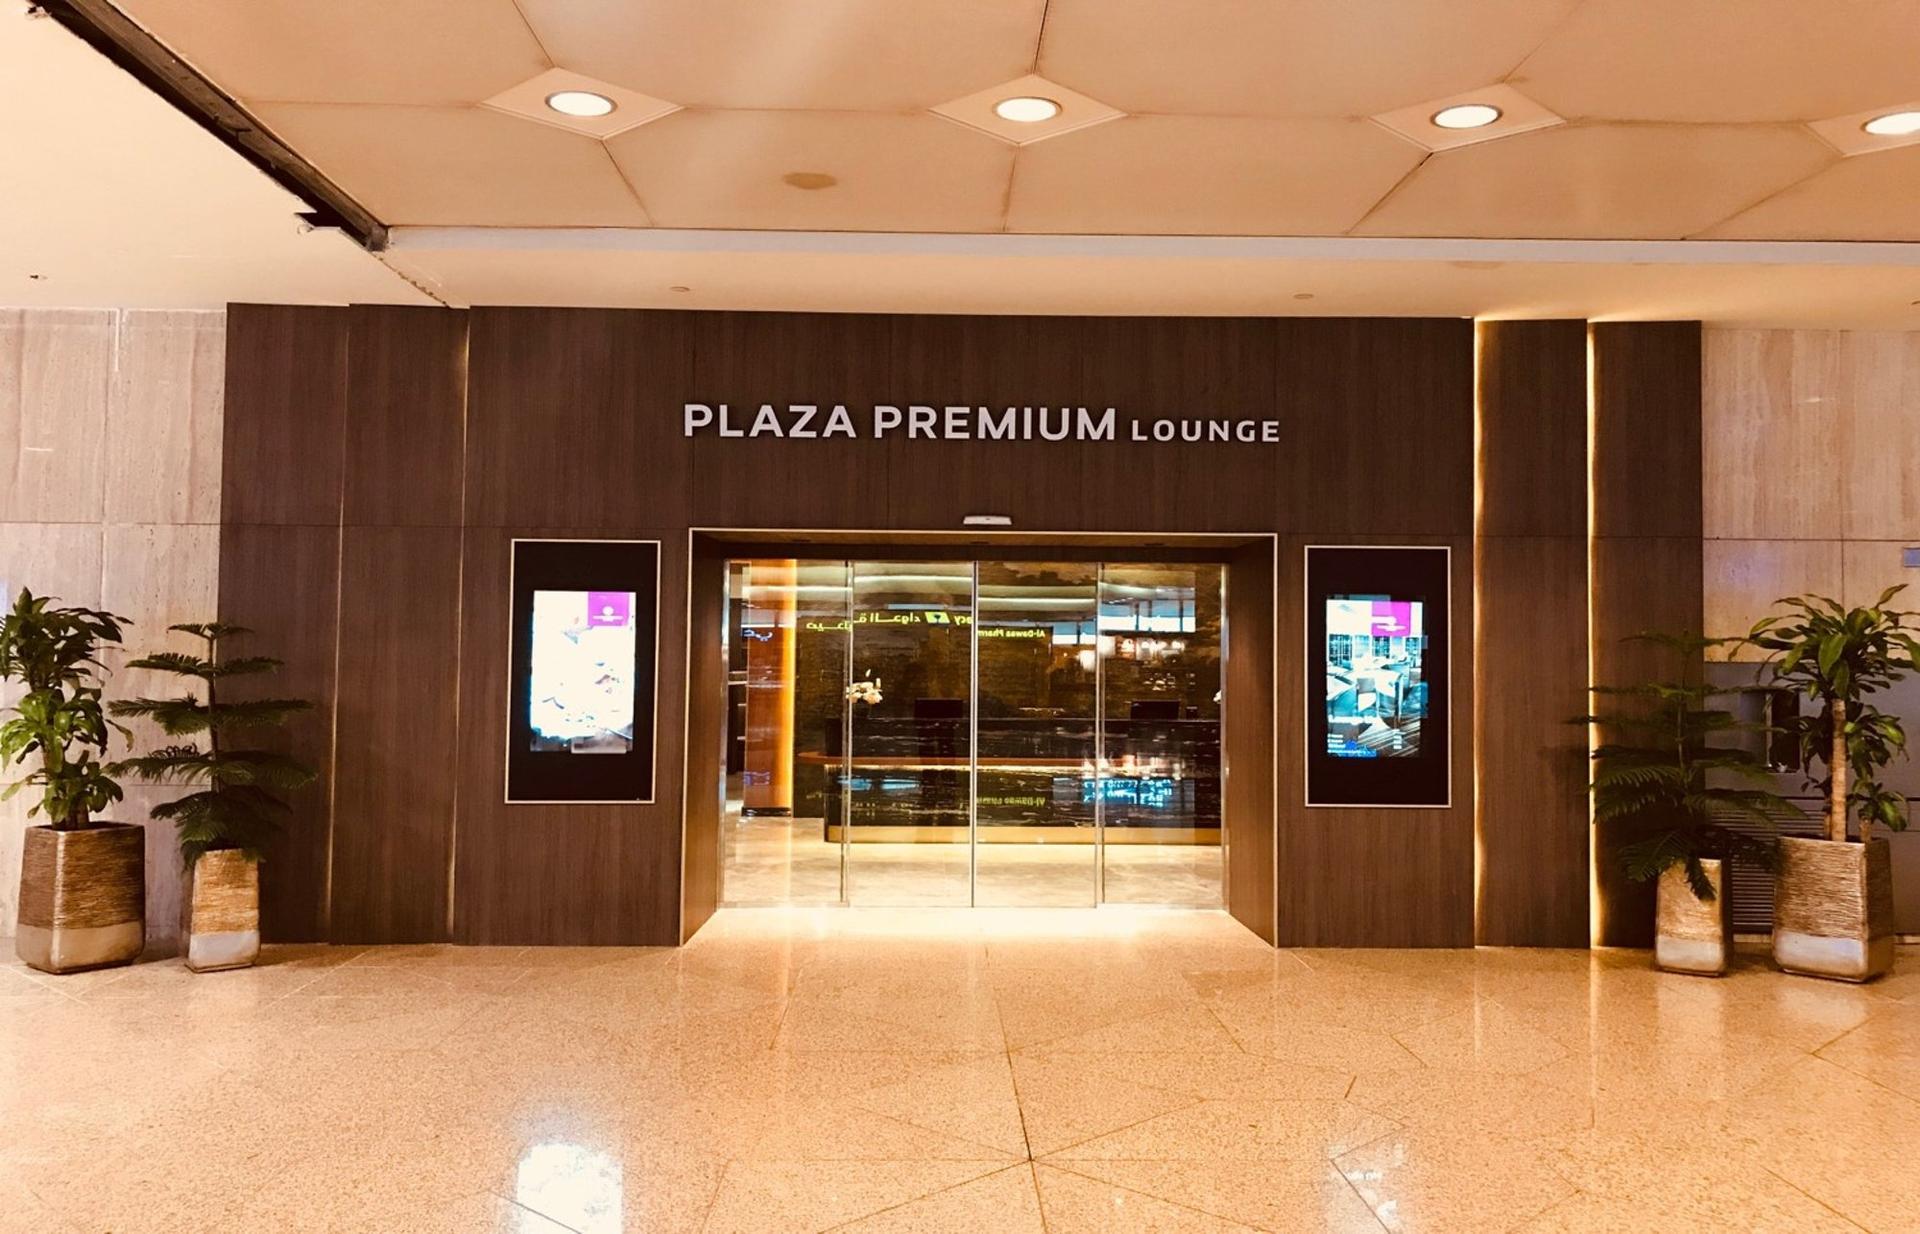 Plaza Premium Lounge image 11 of 20